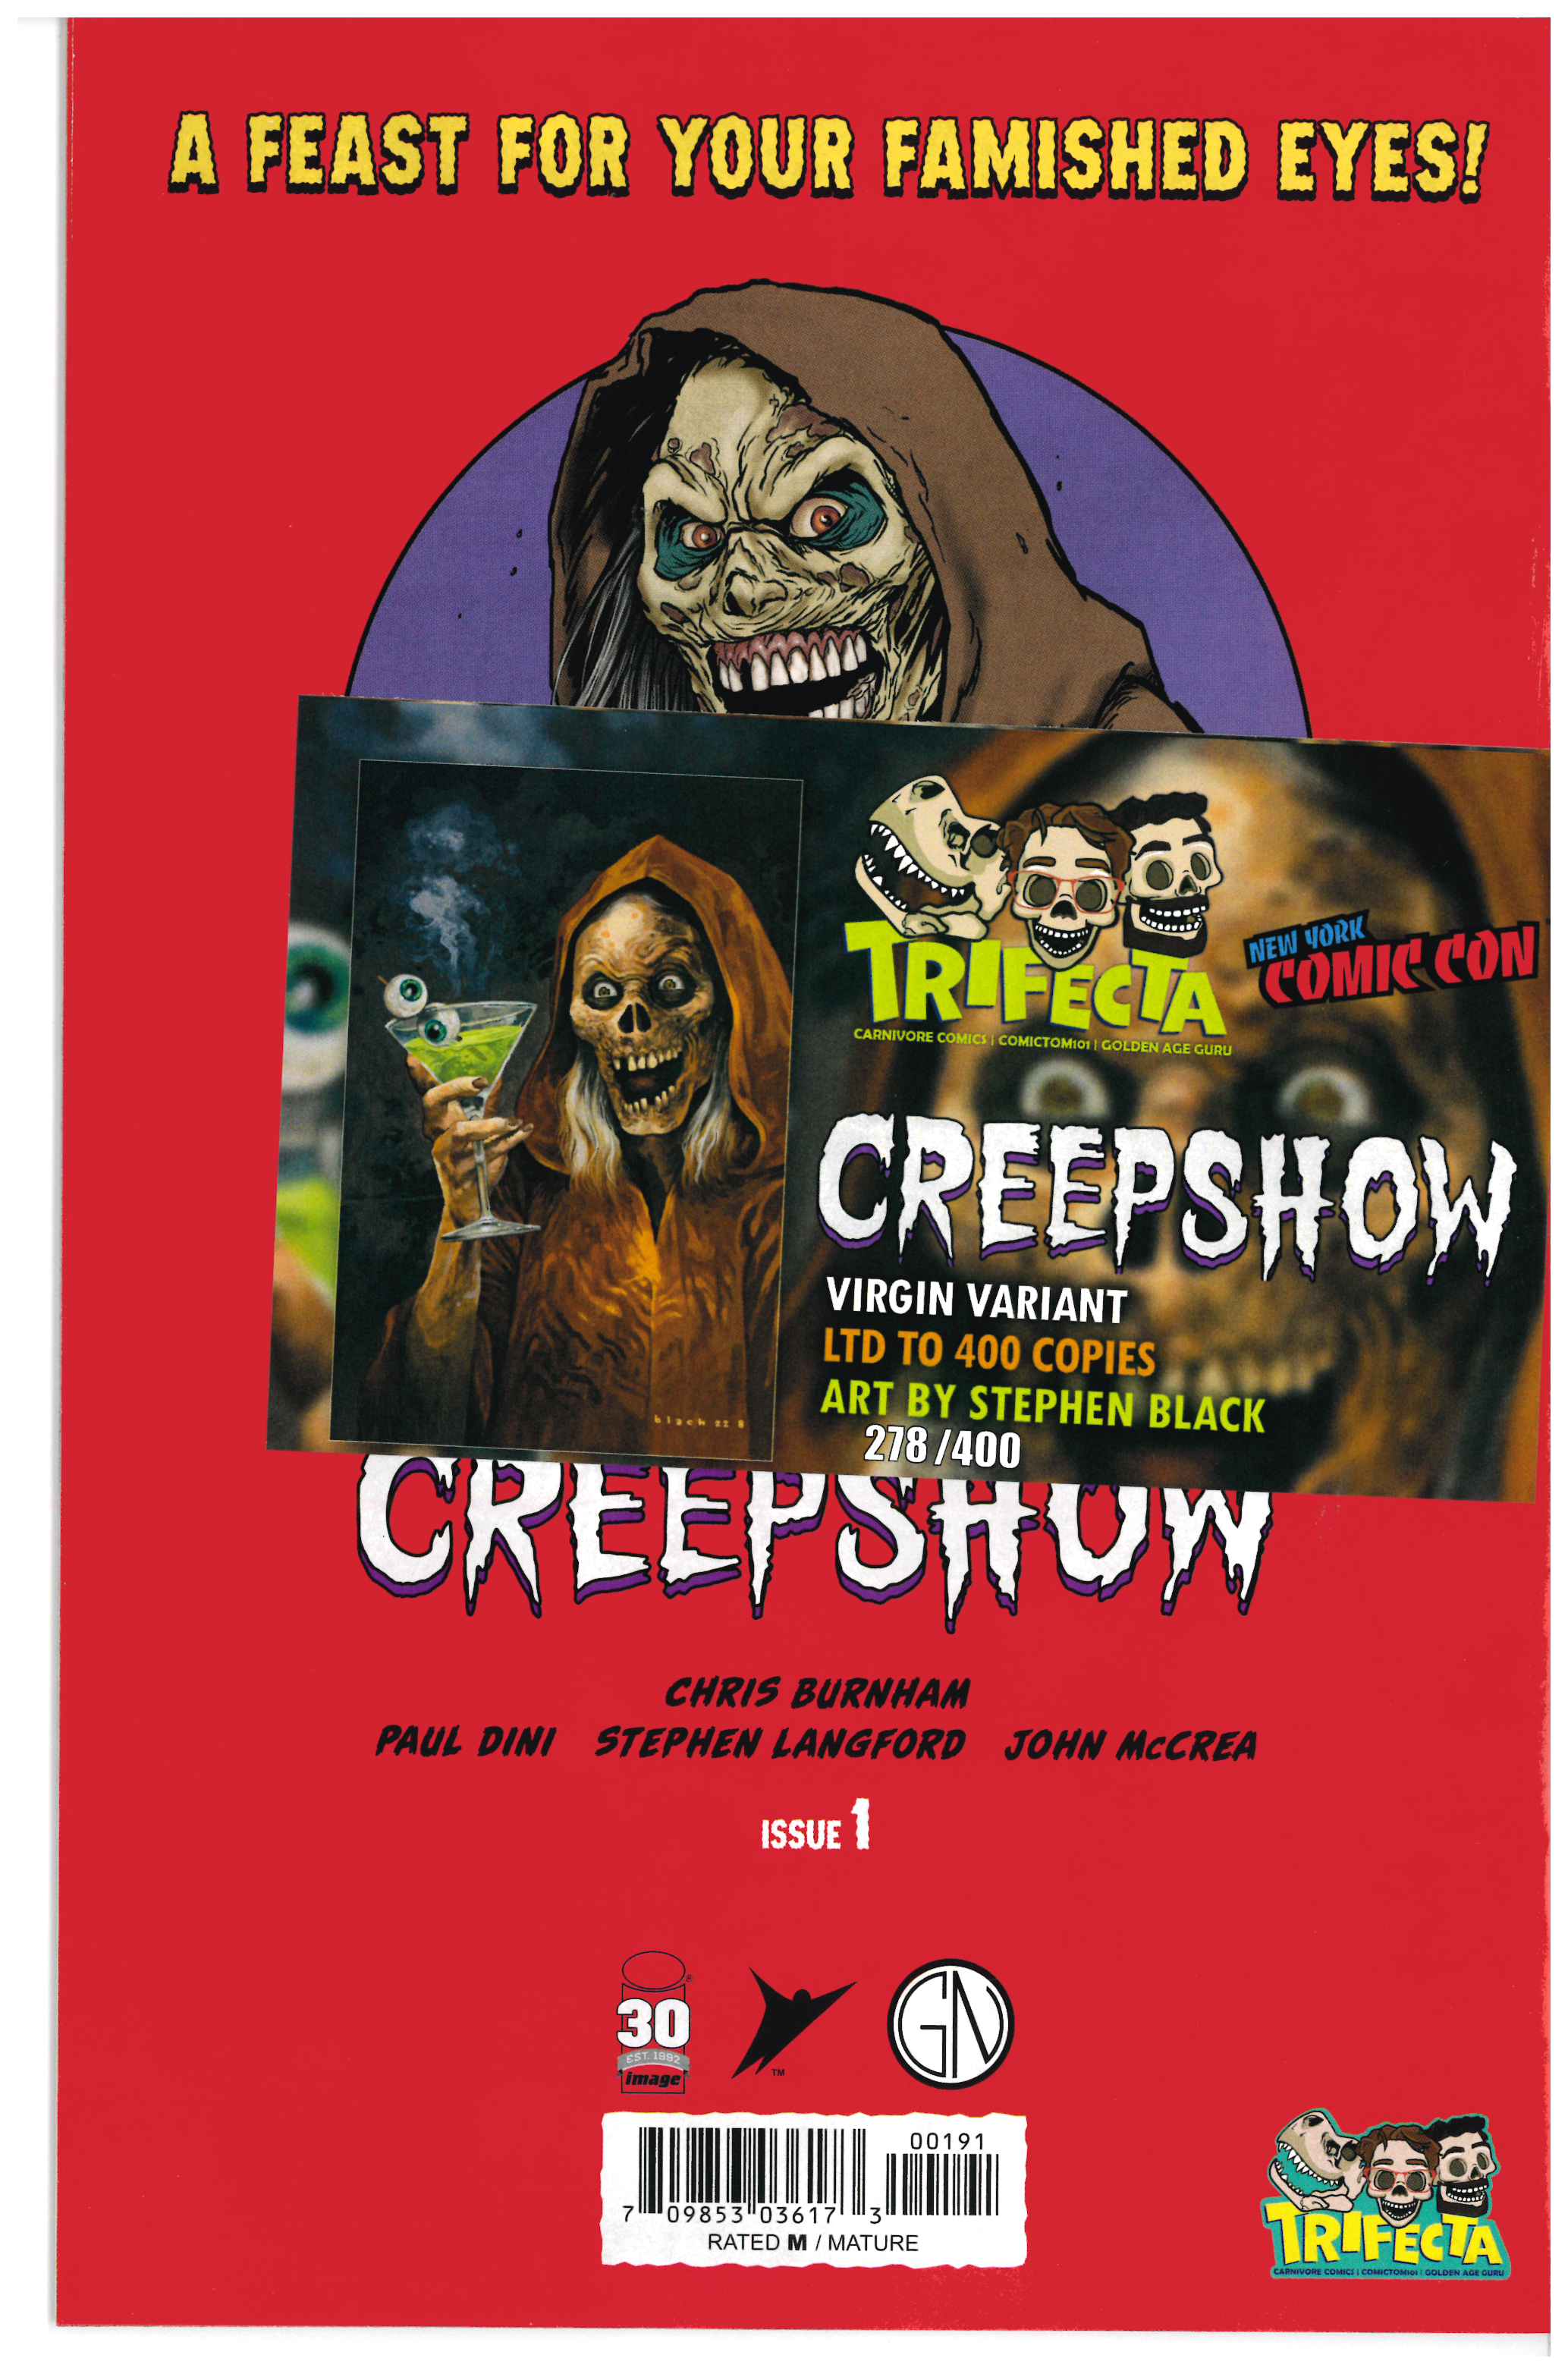 Creepshow #1 Certificate of Authenticity